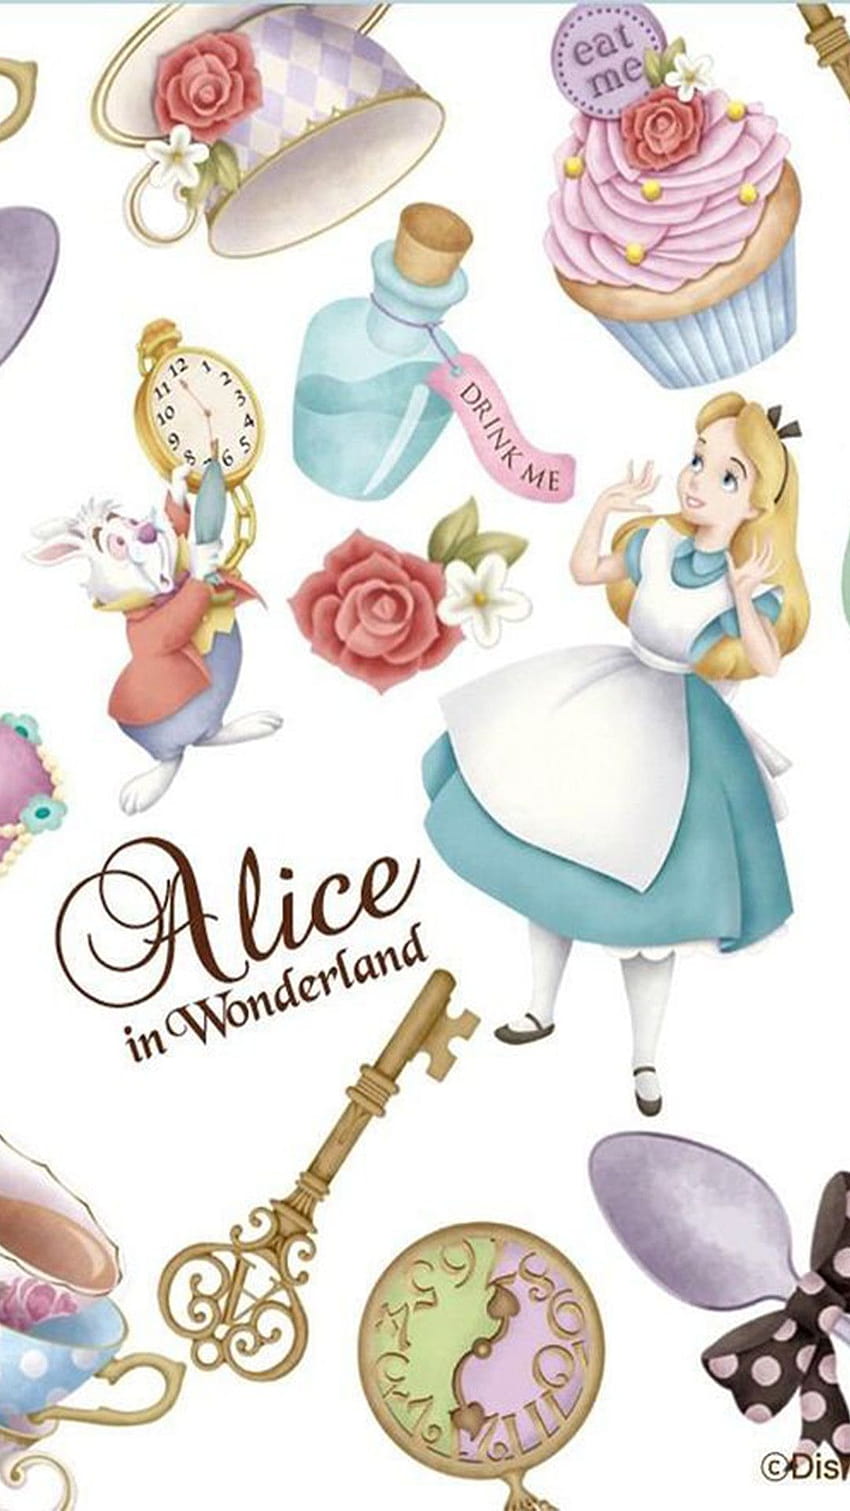 Wallpaper ID 326775  Movie Alice in Wonderland 2010 Phone Wallpaper  Queen Of Hearts Cheshire Cat Anne Hathaway Tweedledee Alice In  Wonderland 1440x2560 free download